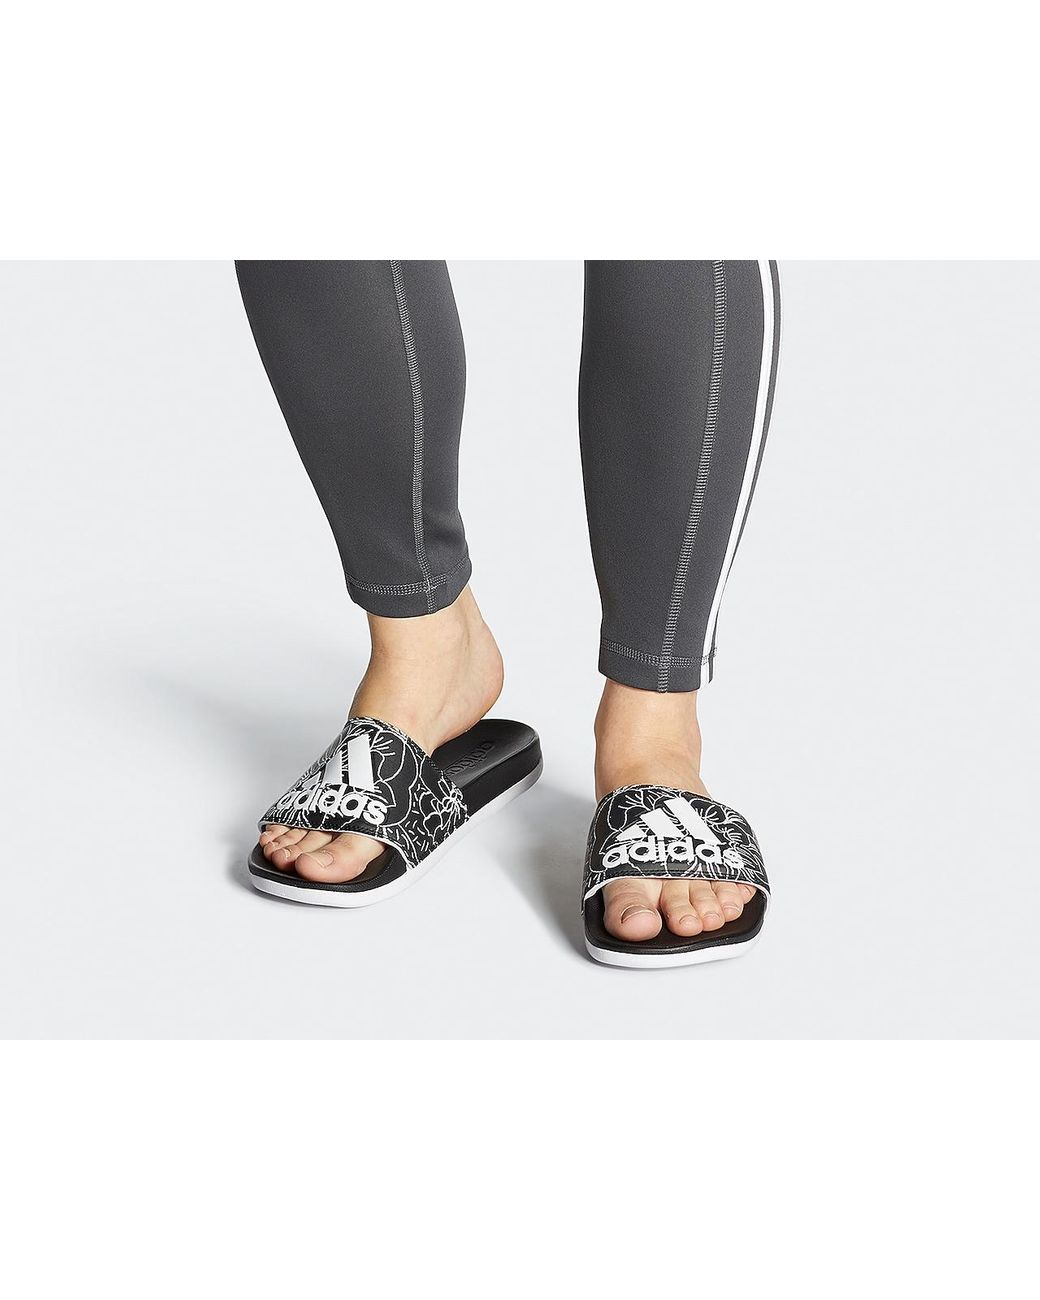 adidas Synthetic Adilette Cf Slide Sandal in Black/White Floral Print  (Black) | Lyst